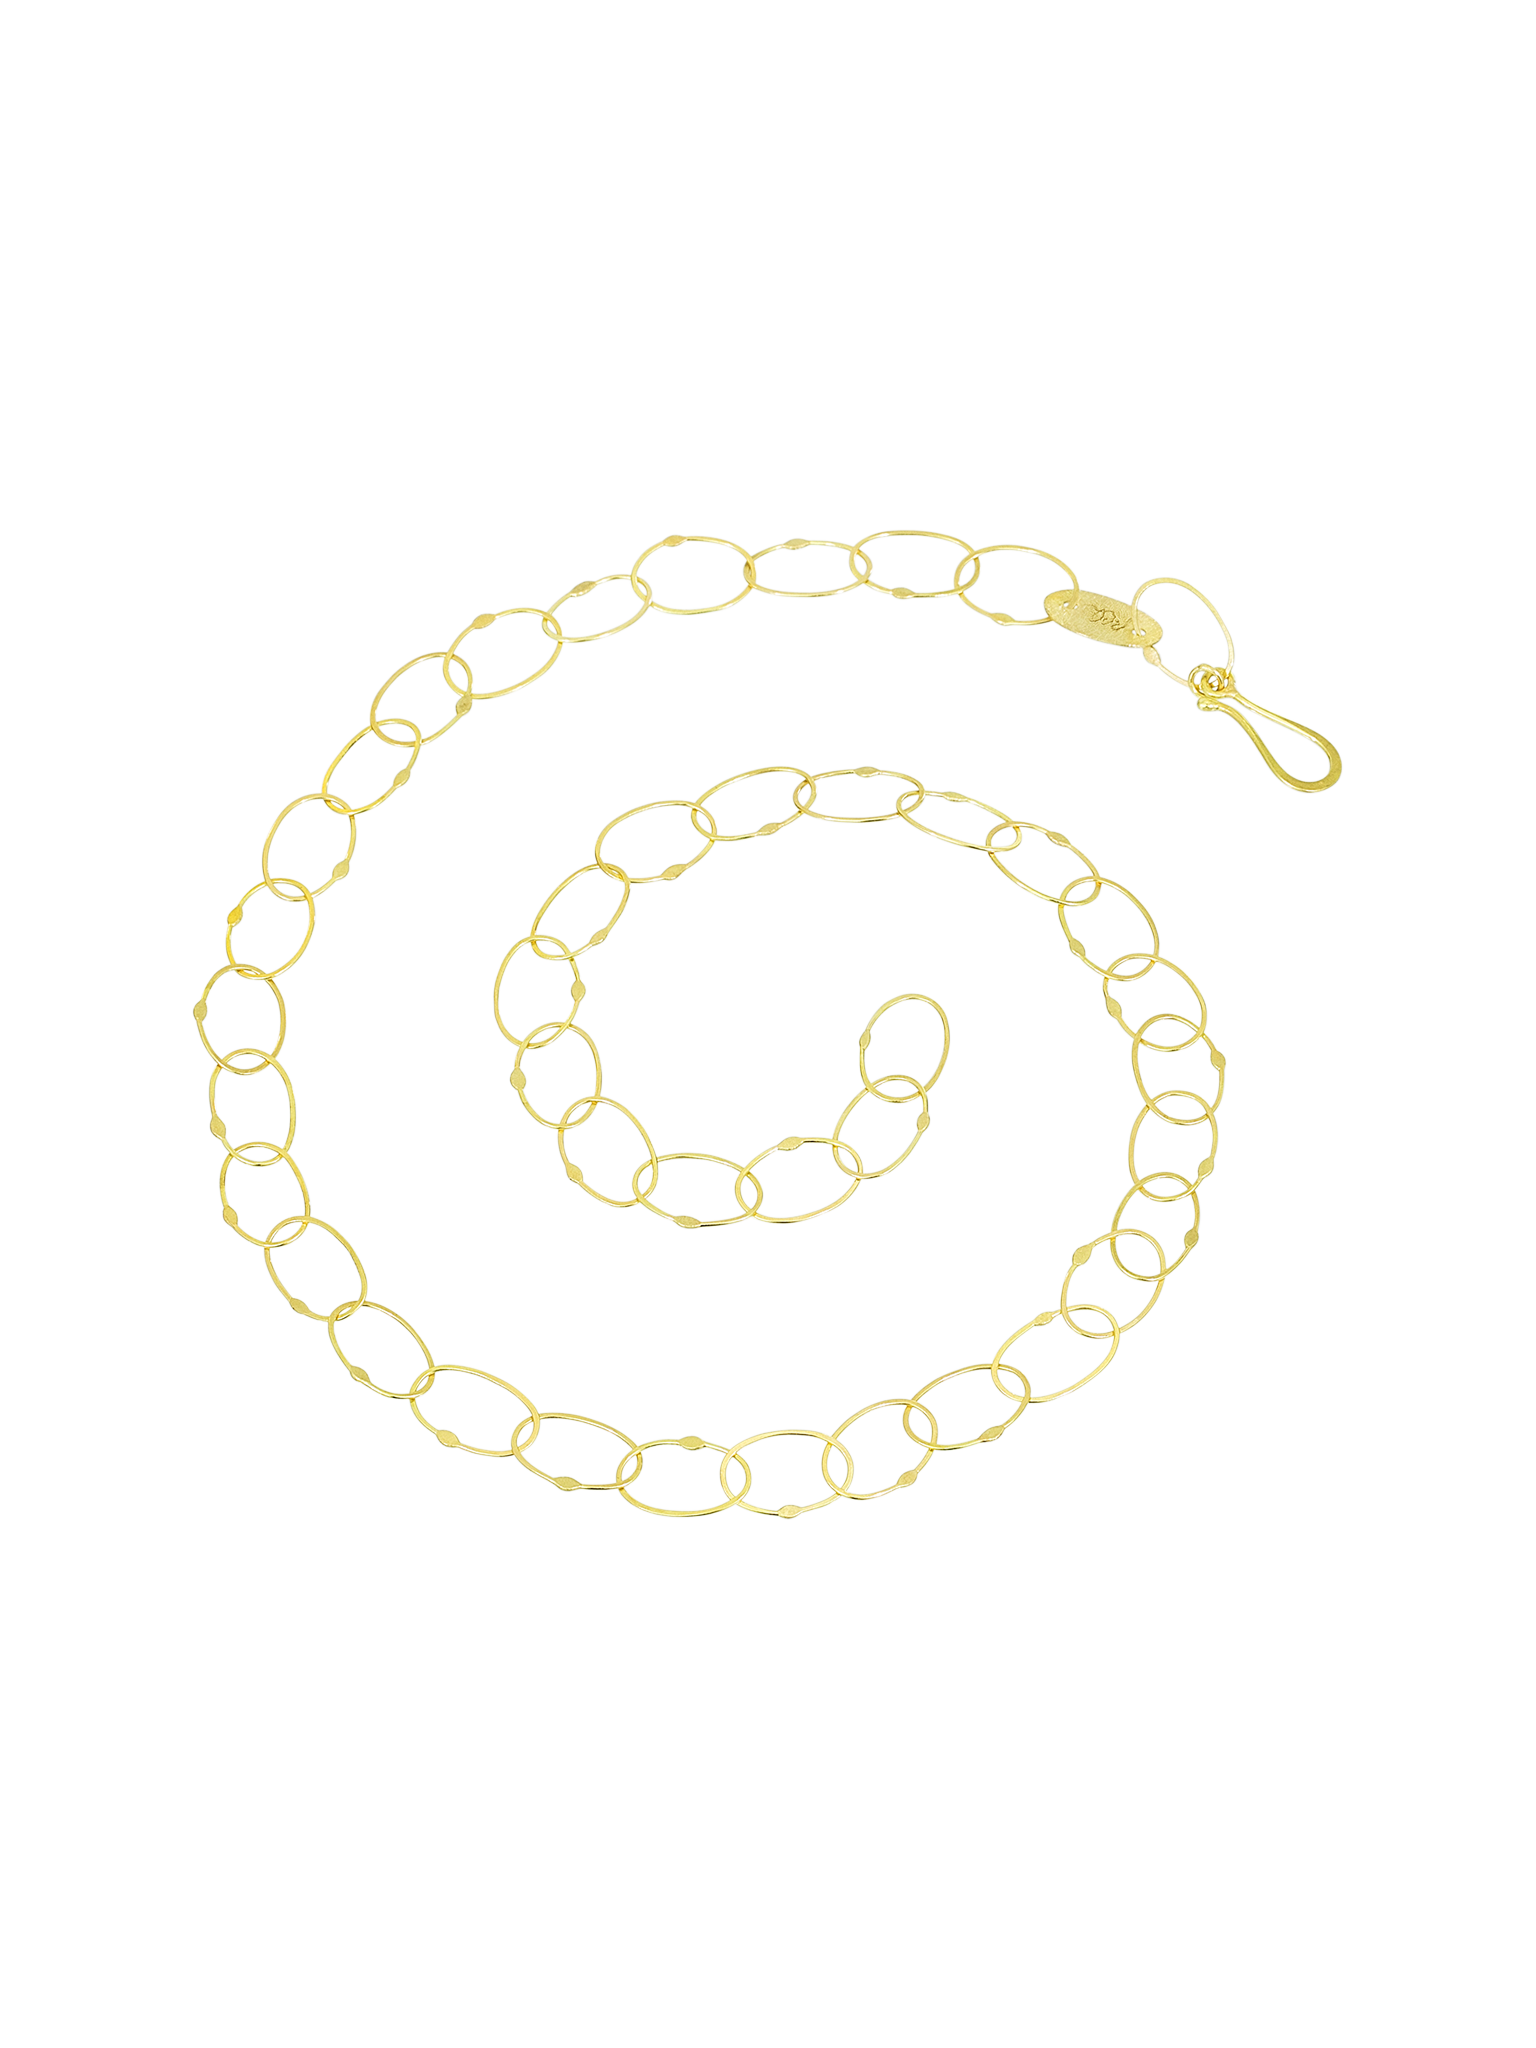 Oval link chain (medium)